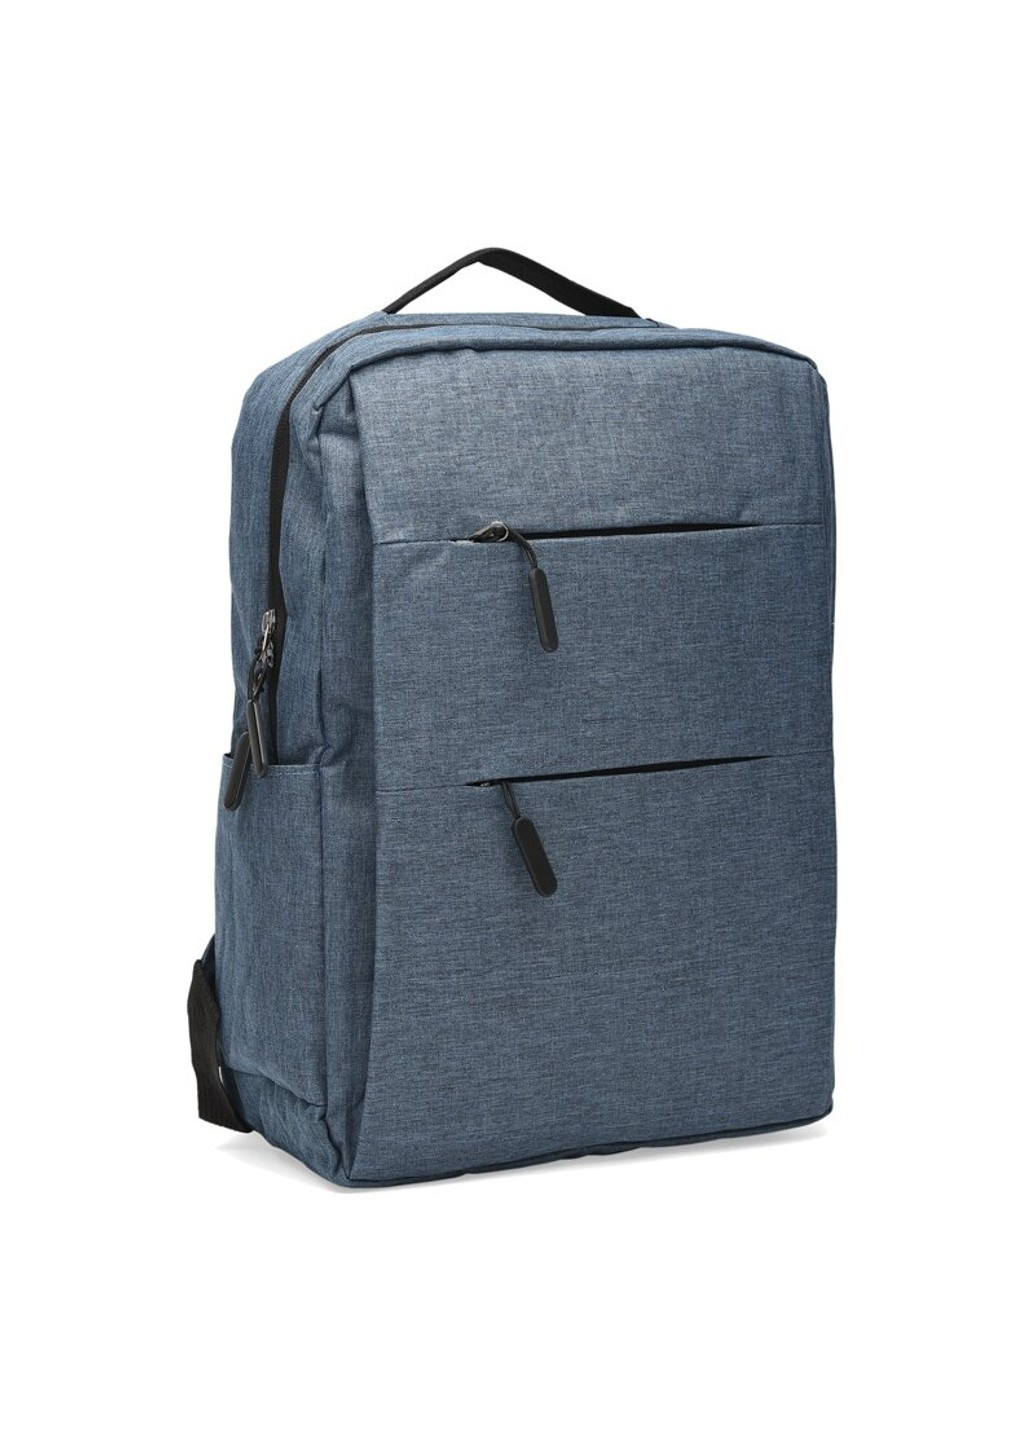 Мужской рюкзак C19011-blue Monsen (266143800)